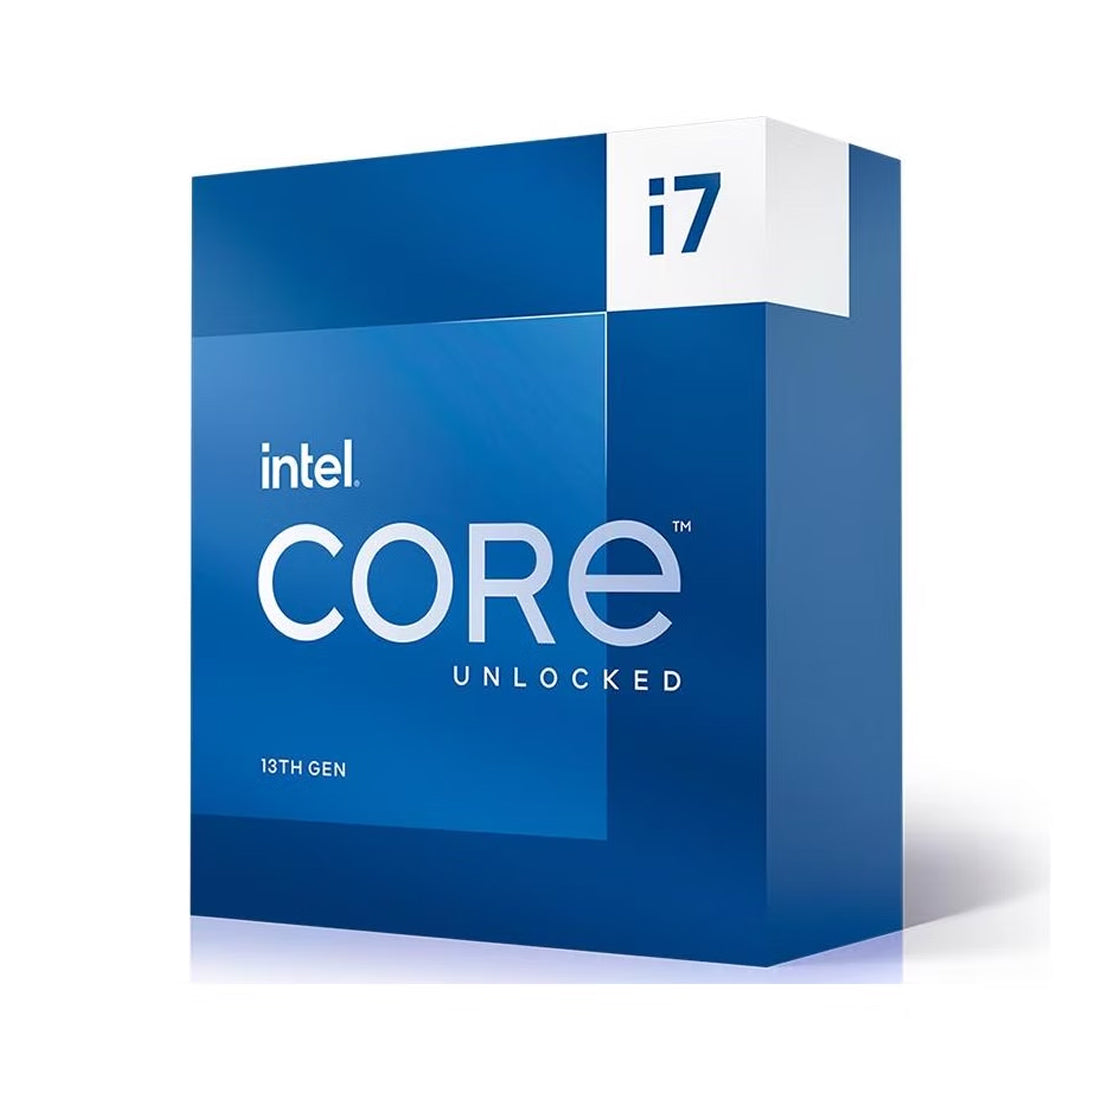 Intel Core 13th Gen i7-13700K LGA1700 Unlocked Desktop Processor 16 Cores up to 5.4GHz 30MB Cache